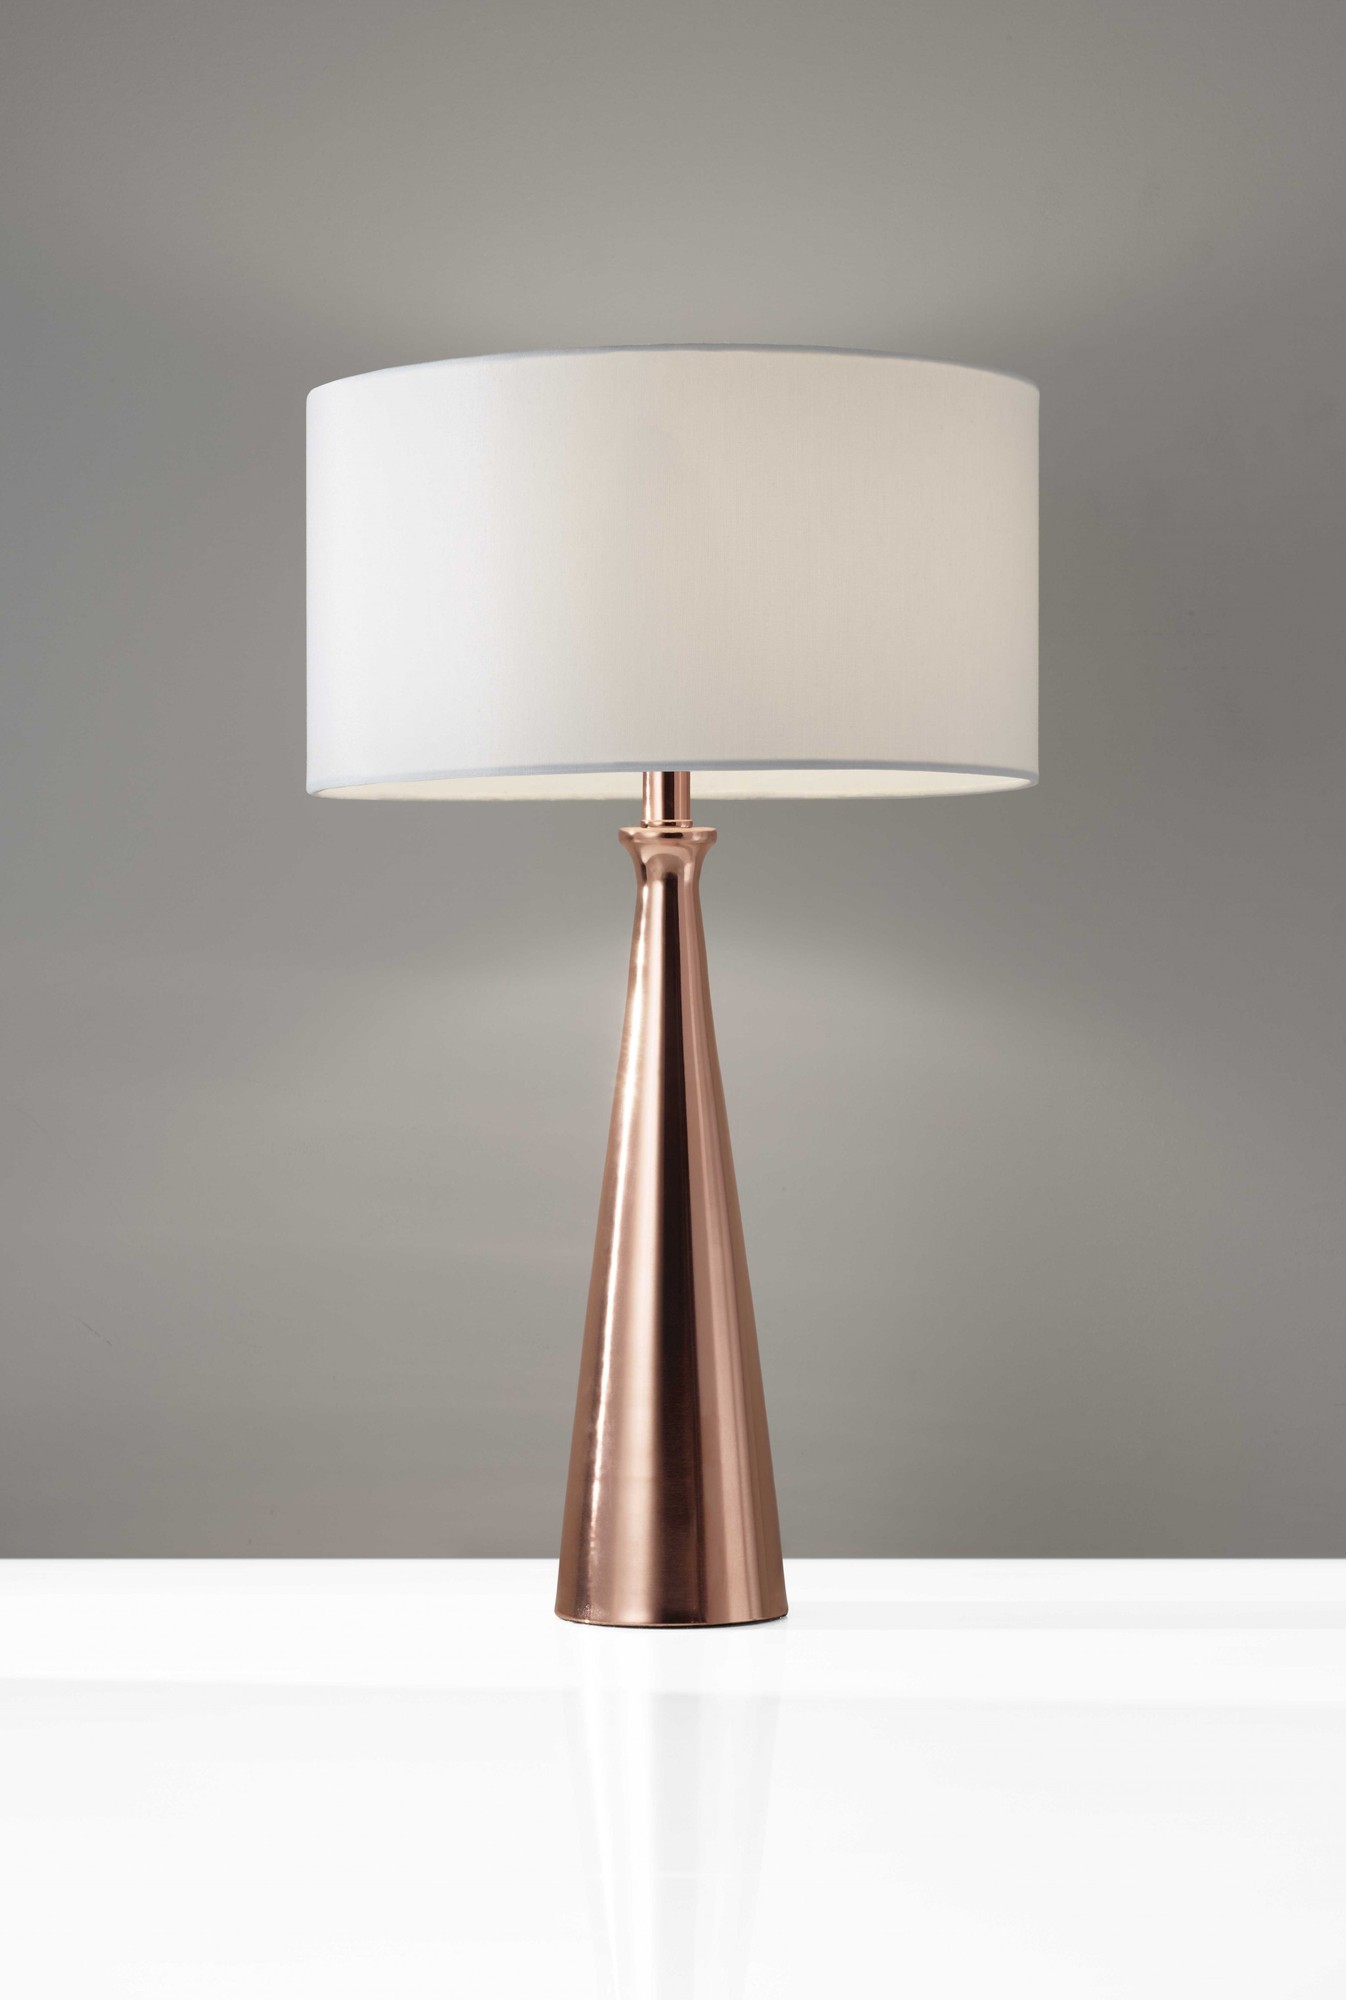 13" X 13" X 21.5" Copper Metal Table Lamp